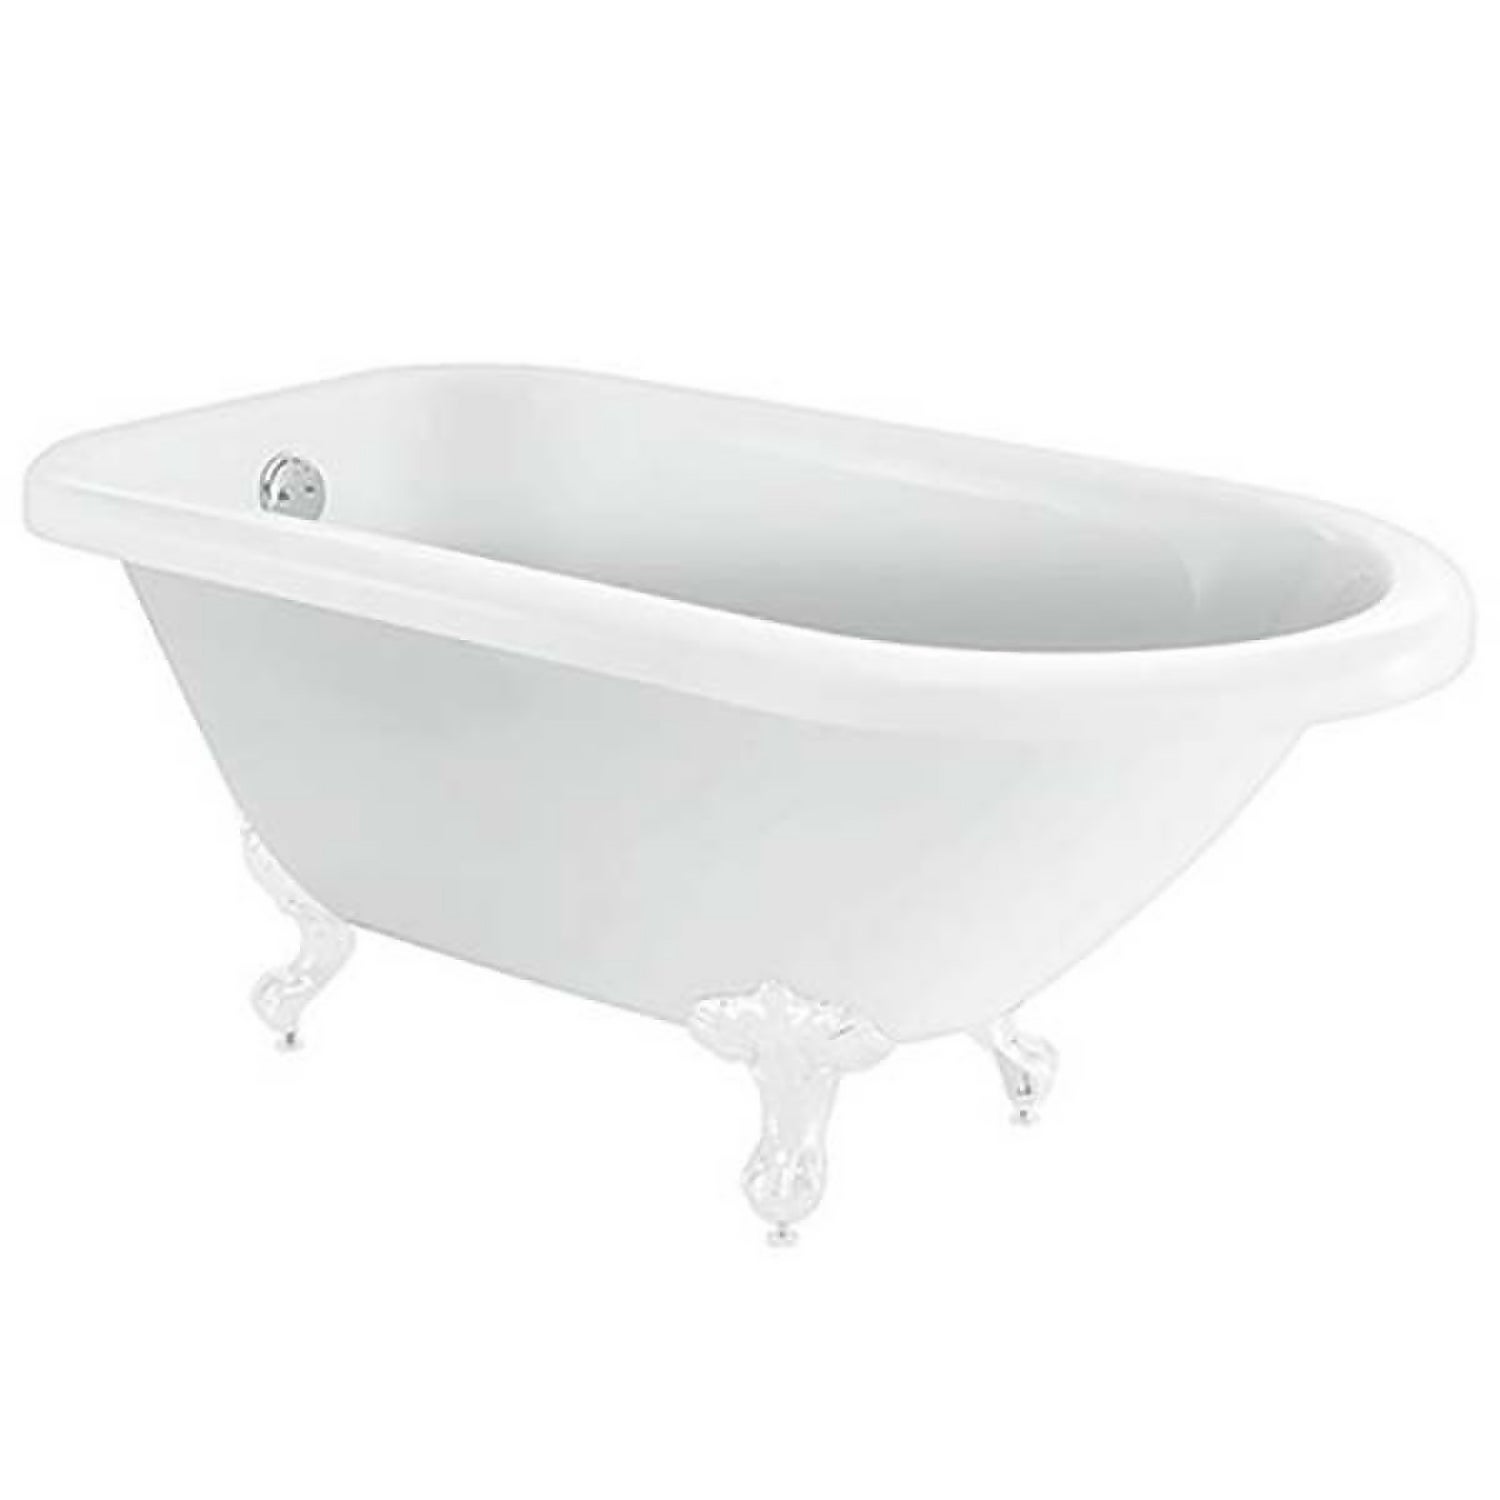 Burford White Compact Roll Top Bath with White Feet